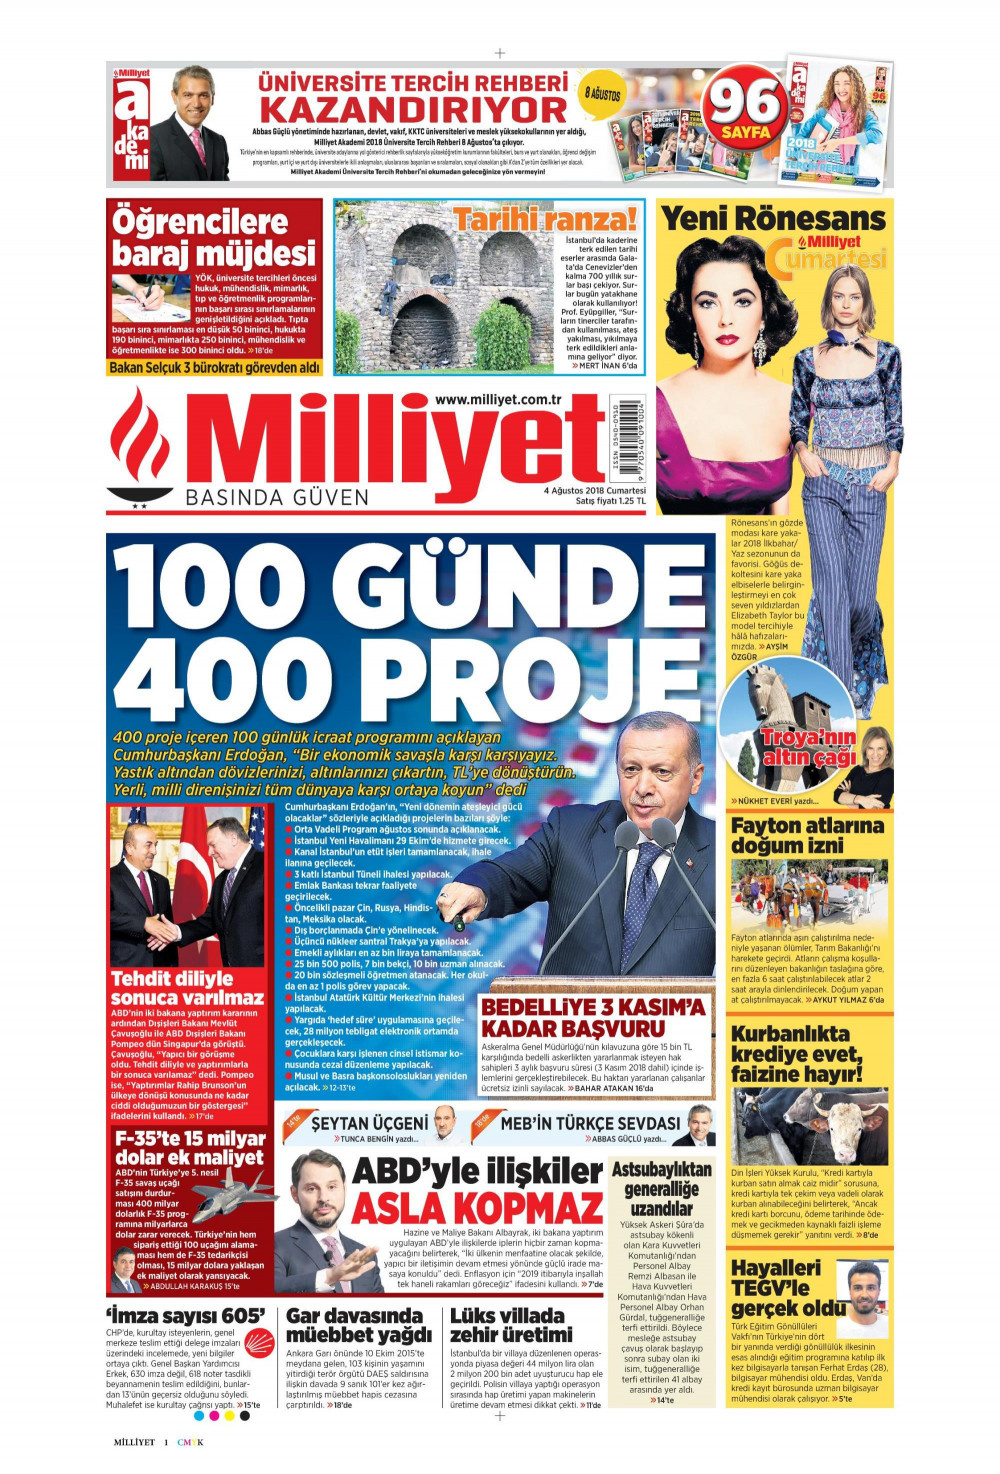 Gazete manşetleri 4 Ağustos 2018 Sabah - Posta - Hürriyet - Milliyet